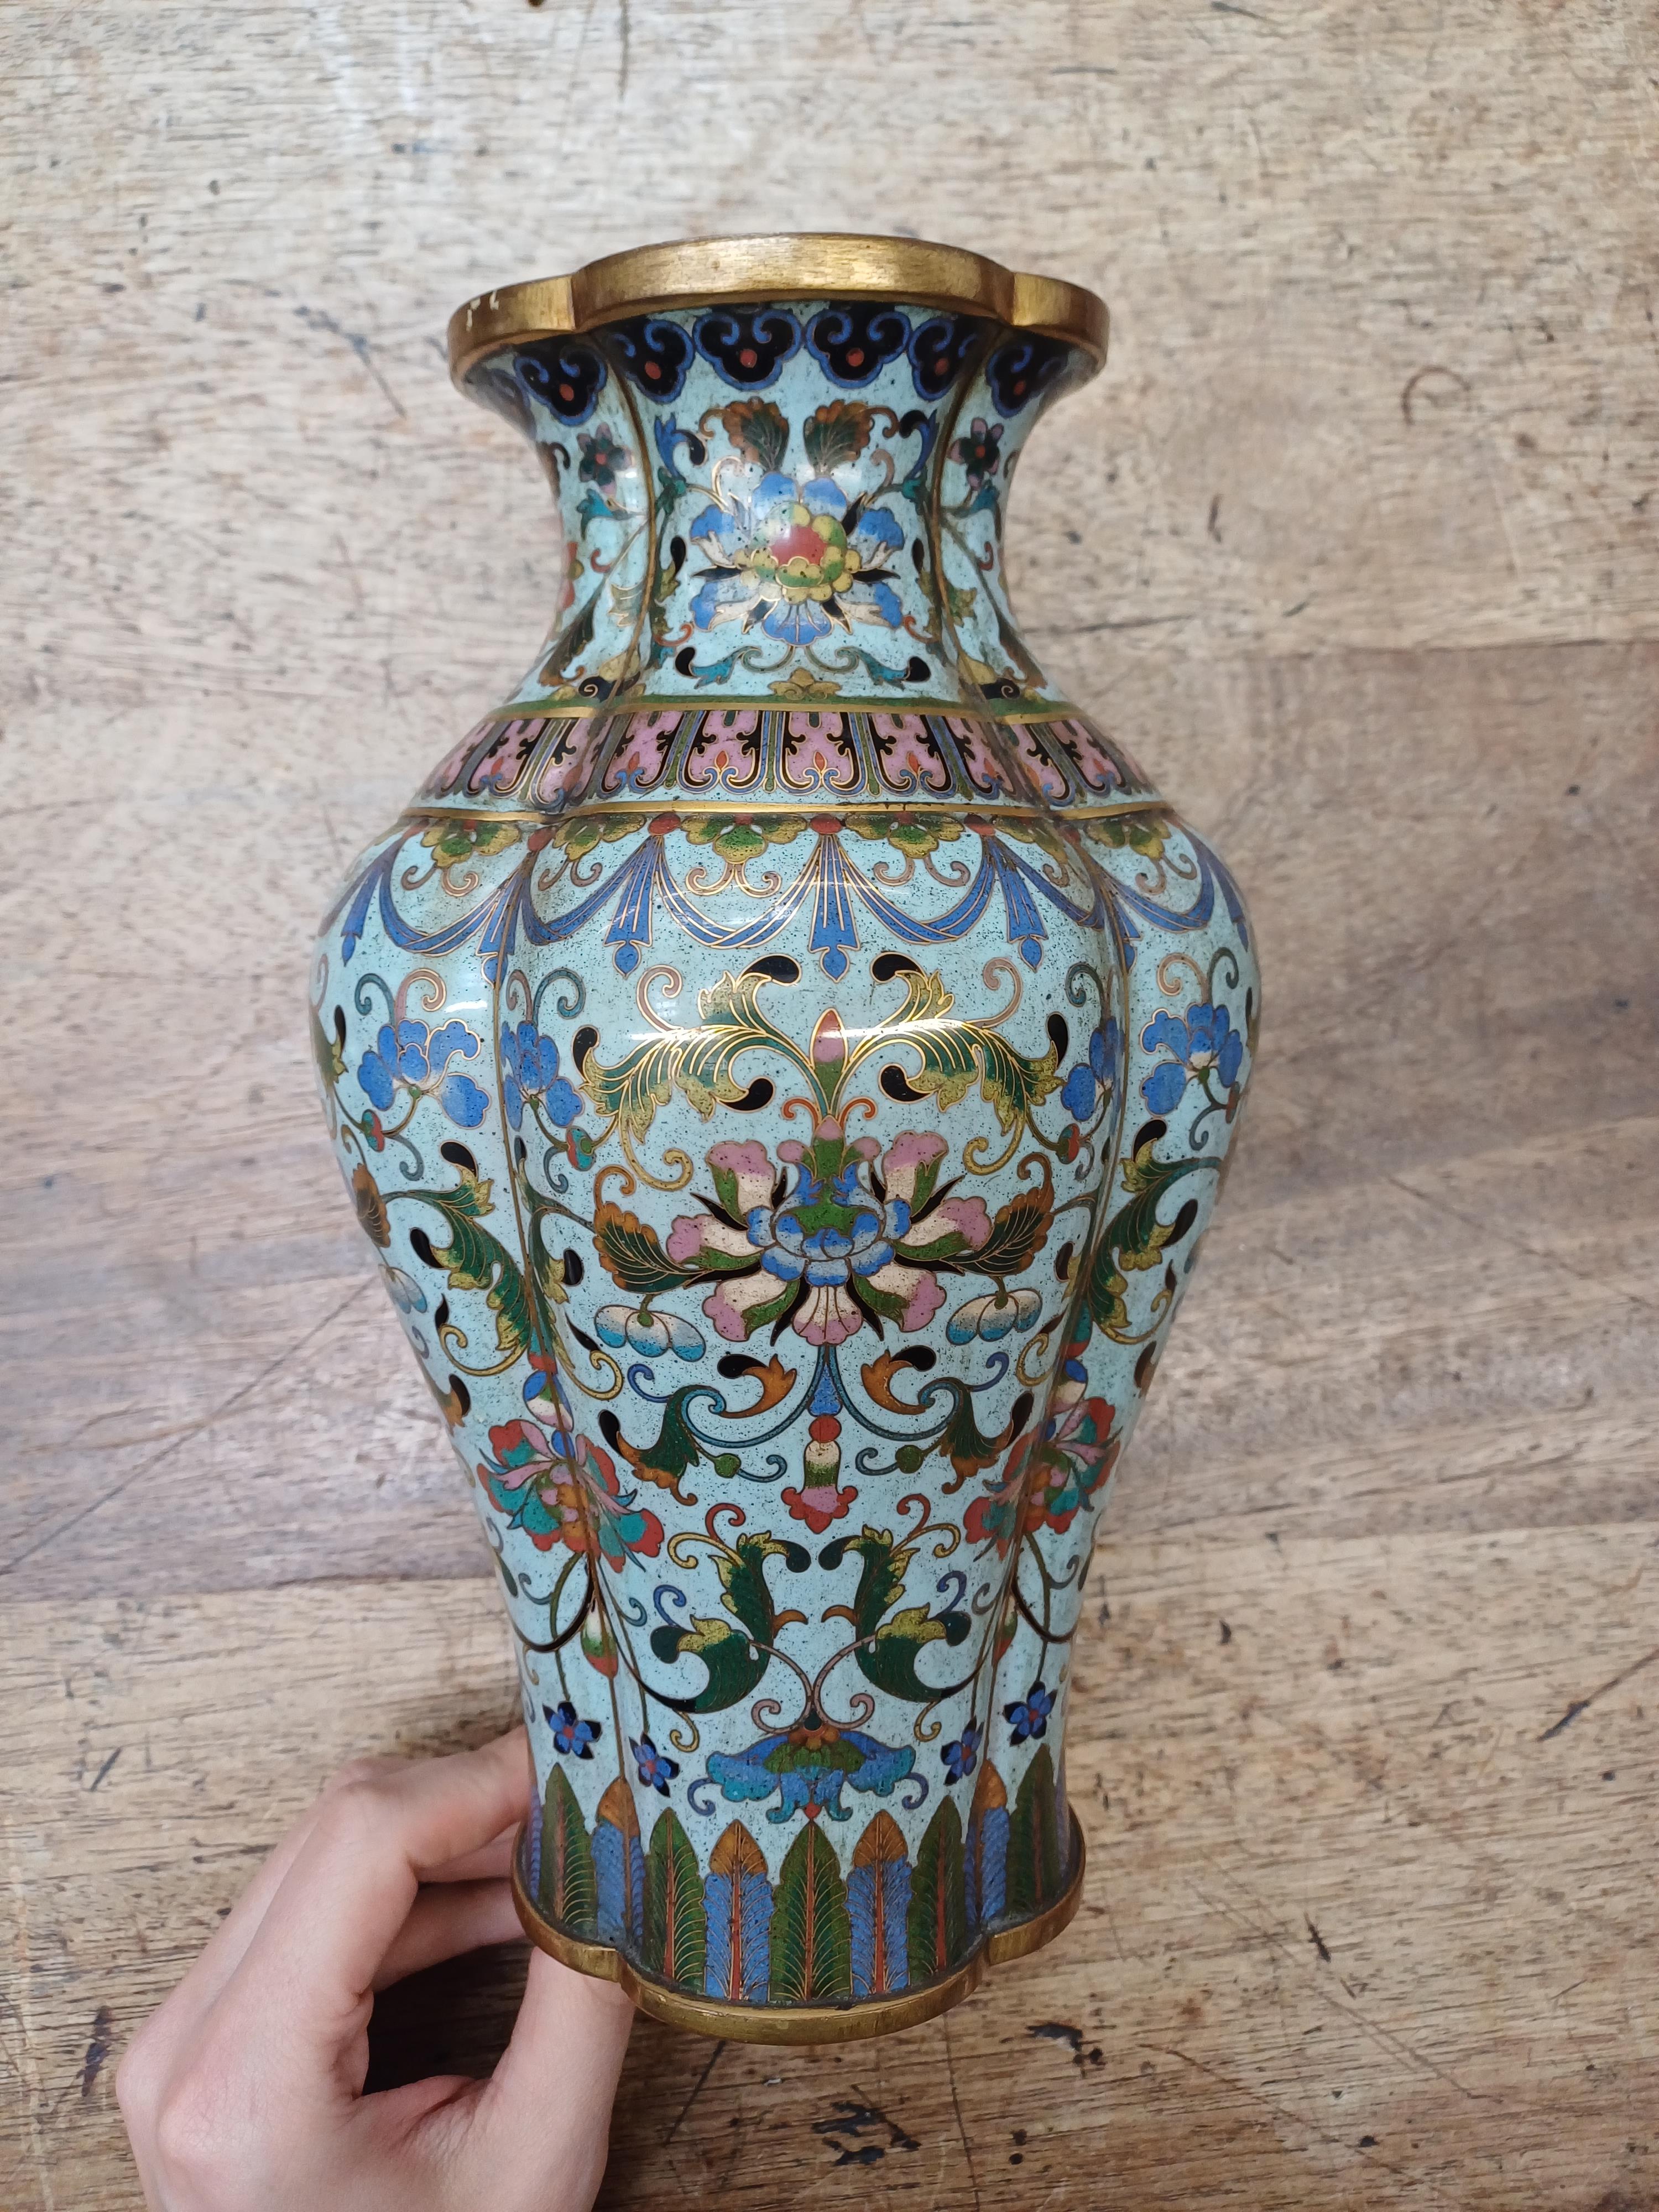 A PAIR OF CHINESE CLOISONNÉ ENAMEL VASES 清十八世紀 銅胎掐絲琺瑯番蓮紋瓶一對 - Image 2 of 17